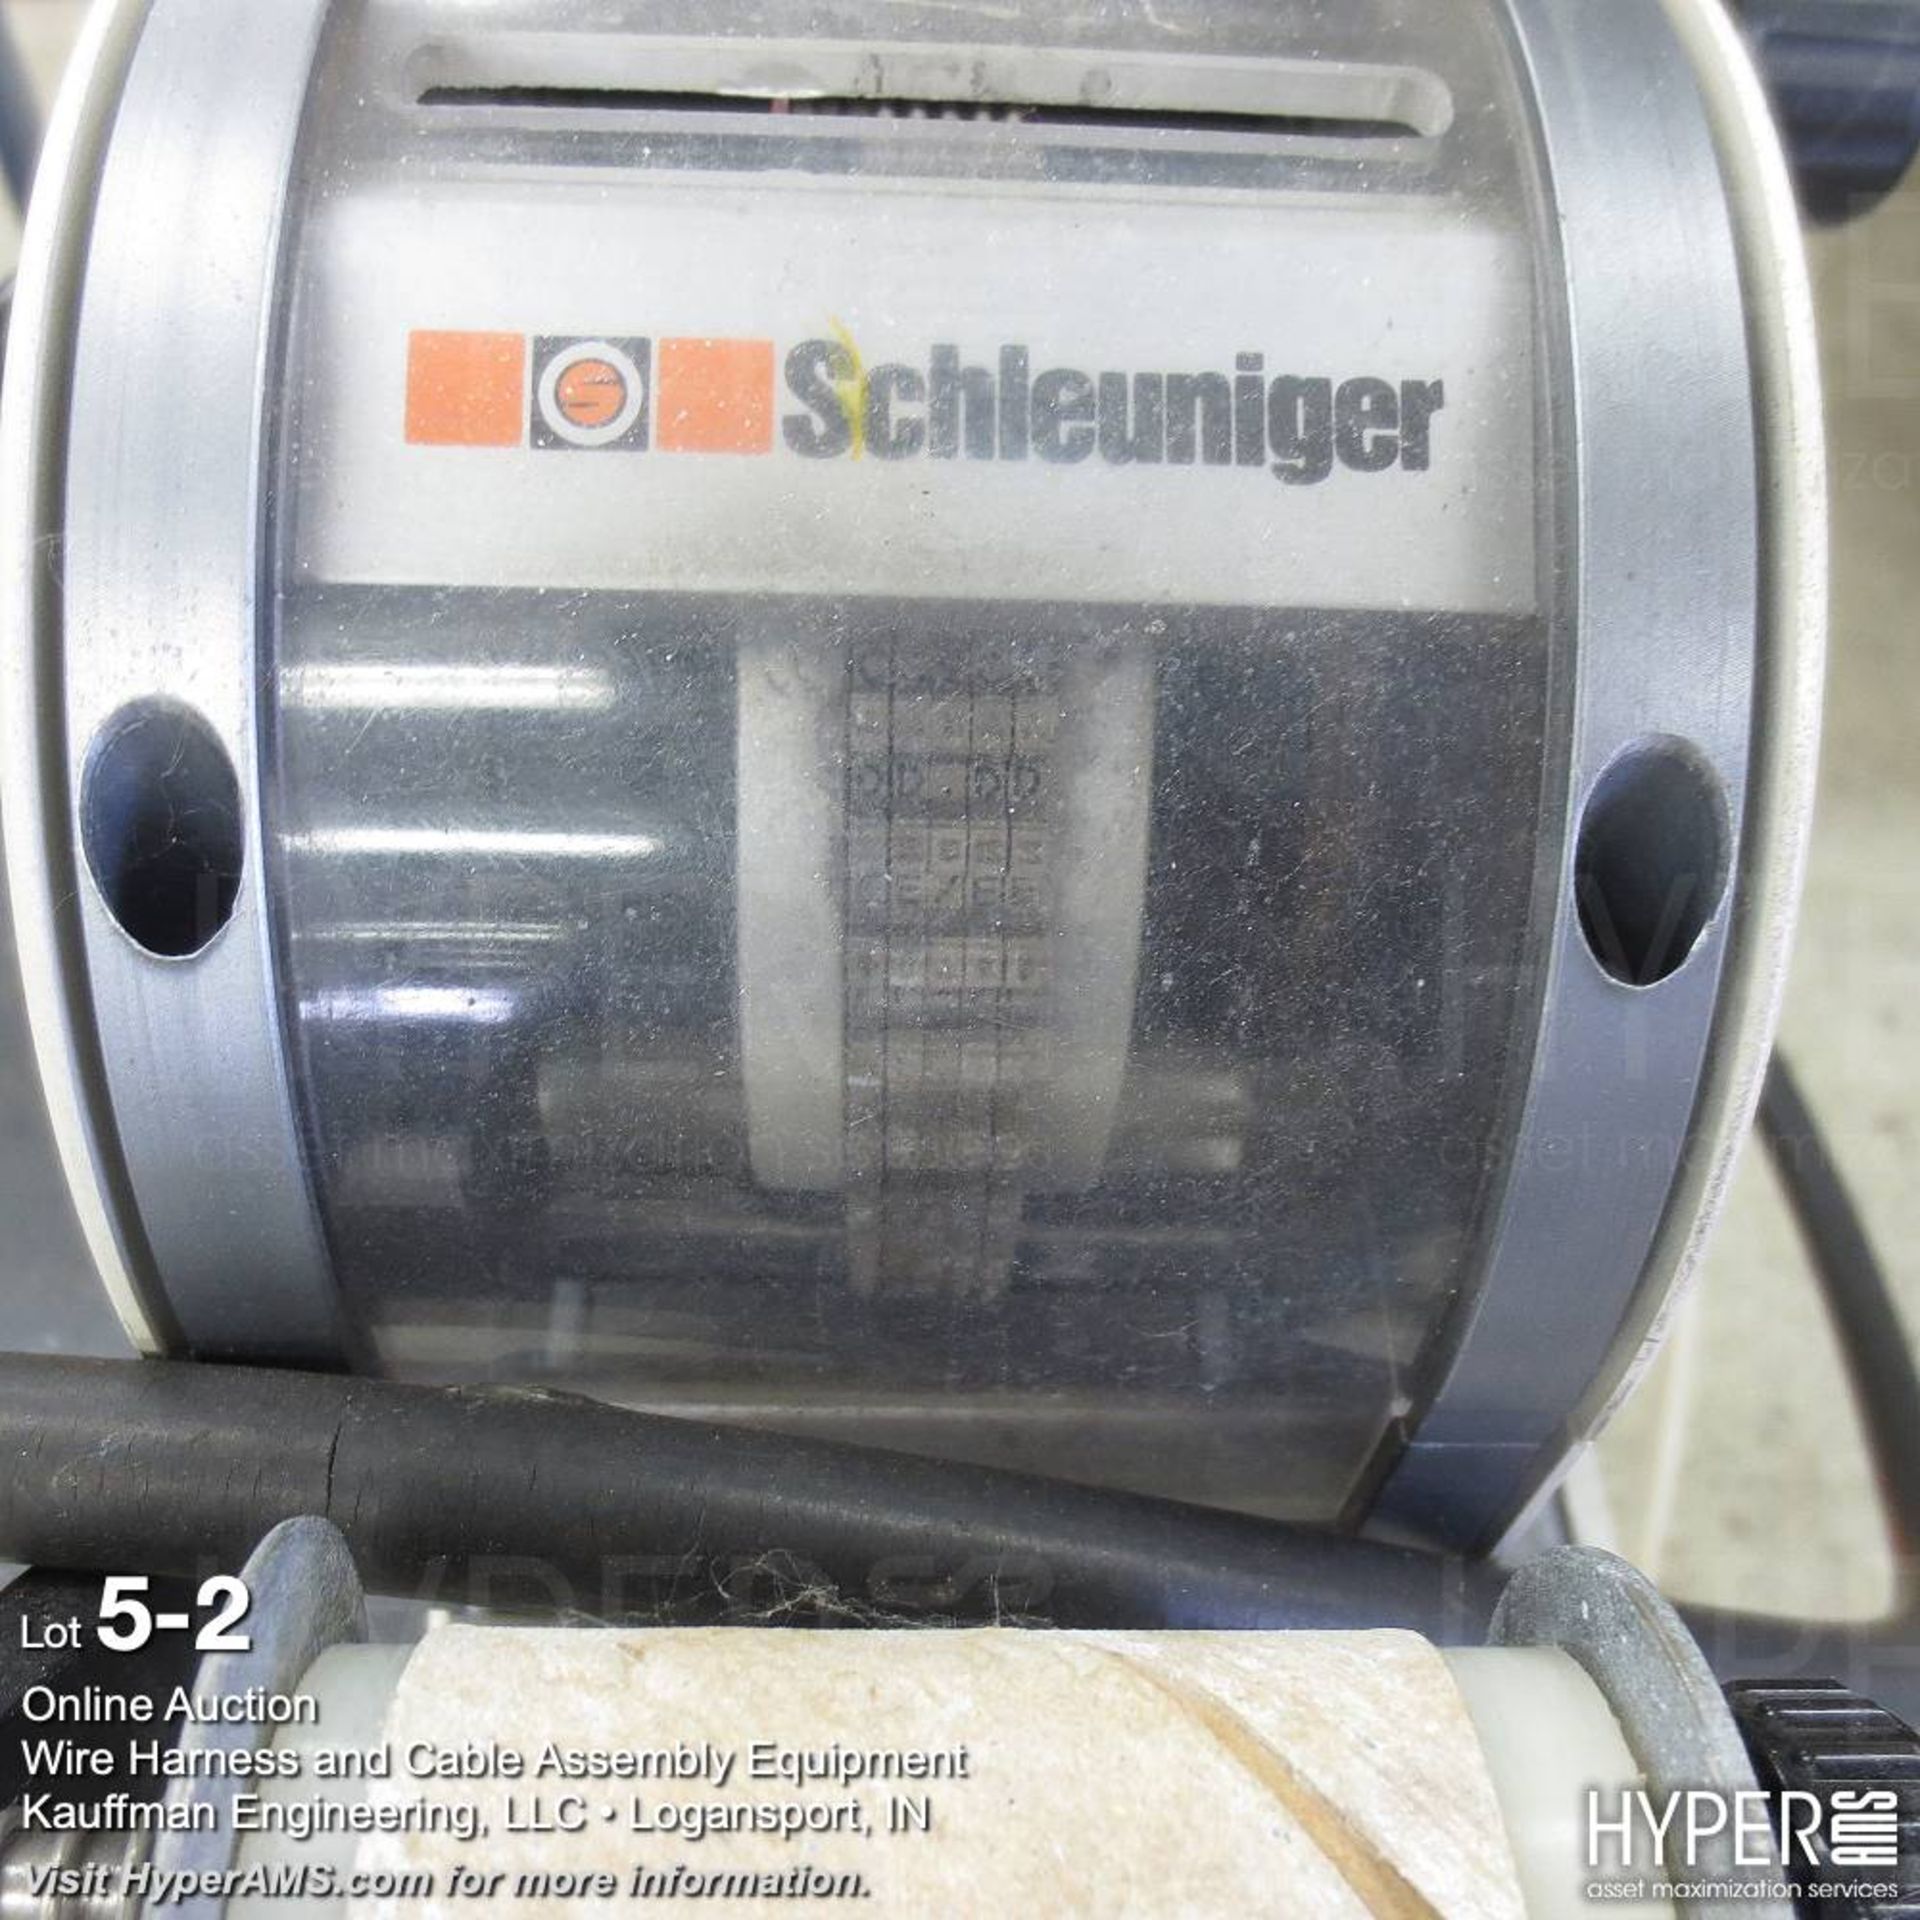 Schleuniger HS4140 stamper - Image 2 of 5